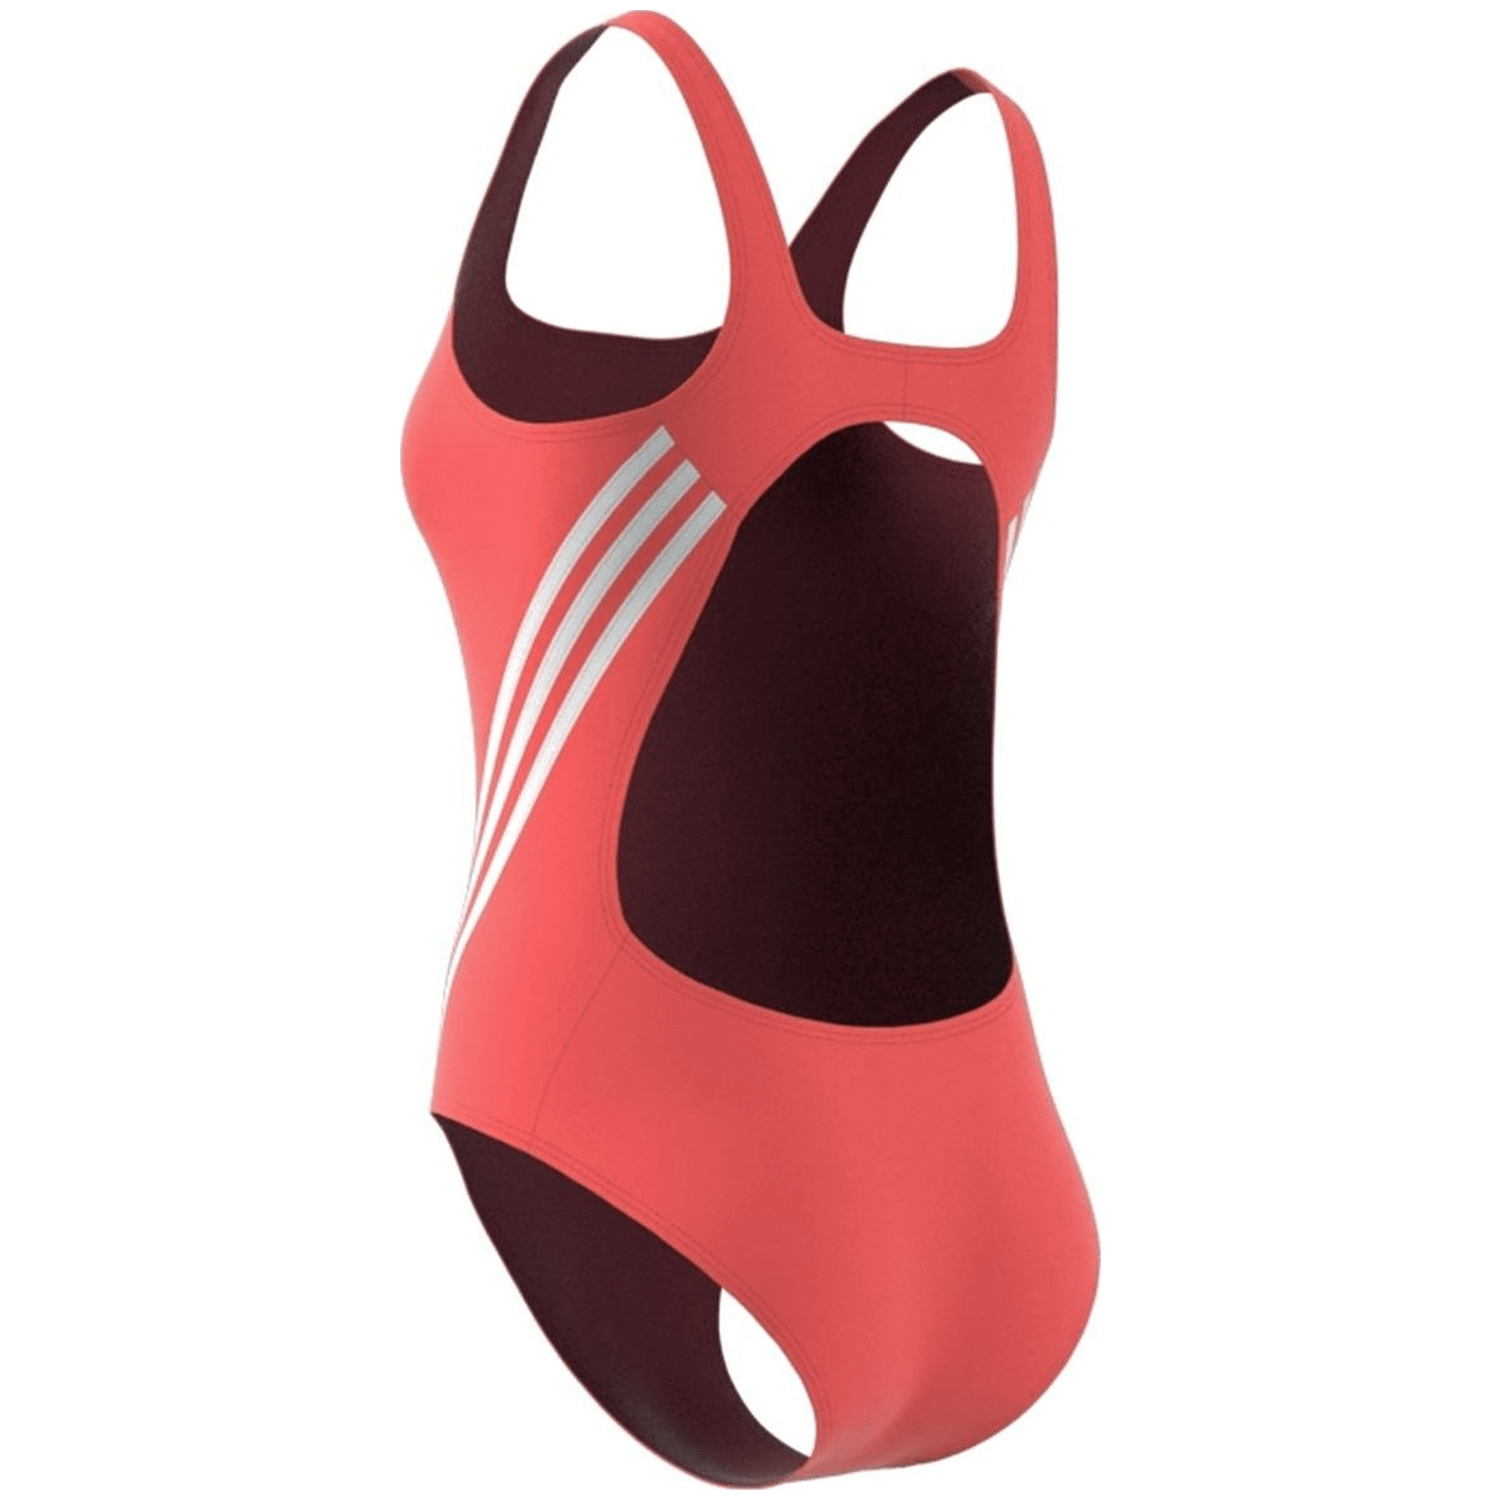 Adidas 3-Streifen Badeanzug Damen